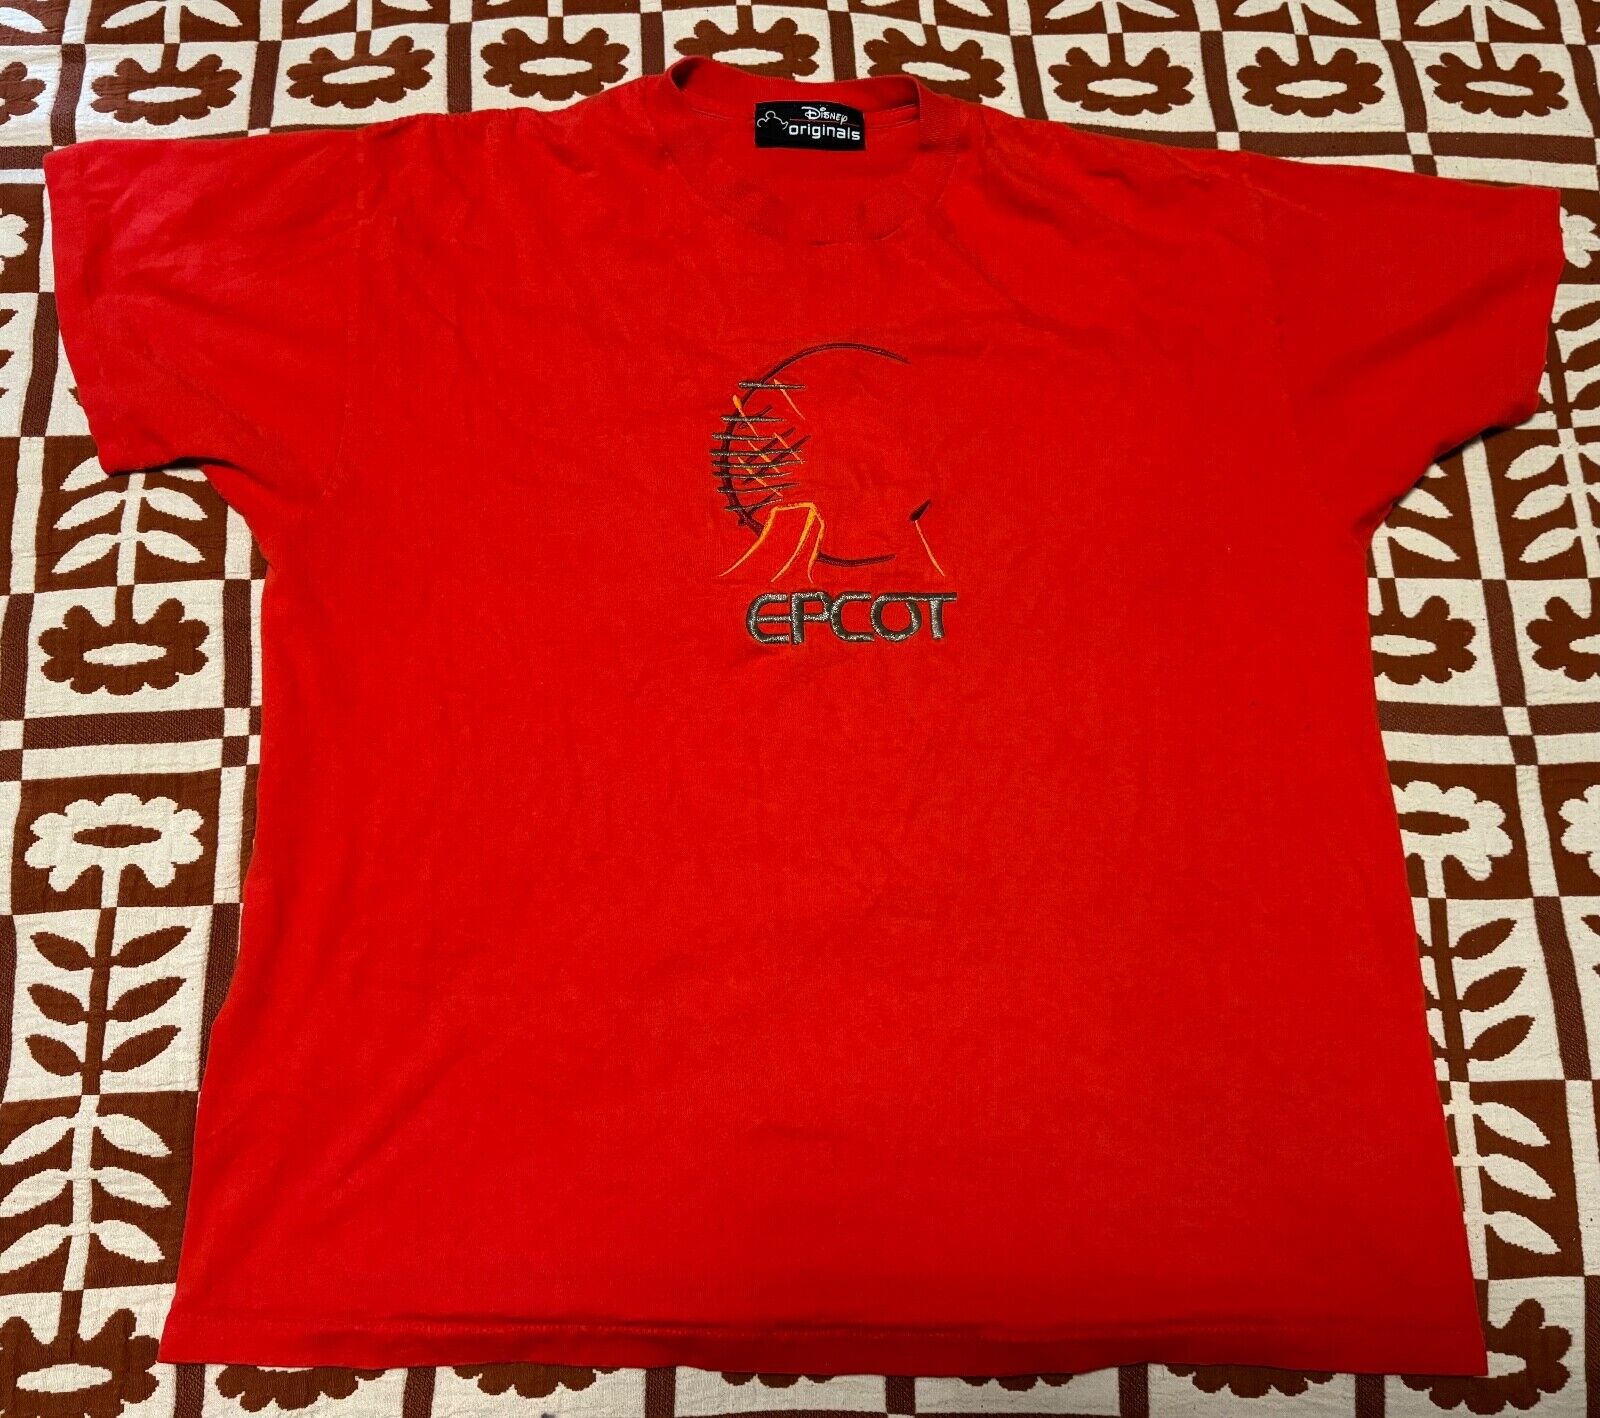 1990s Vintage Embroidered EPCOT T-shirt - Disney Originals - Red